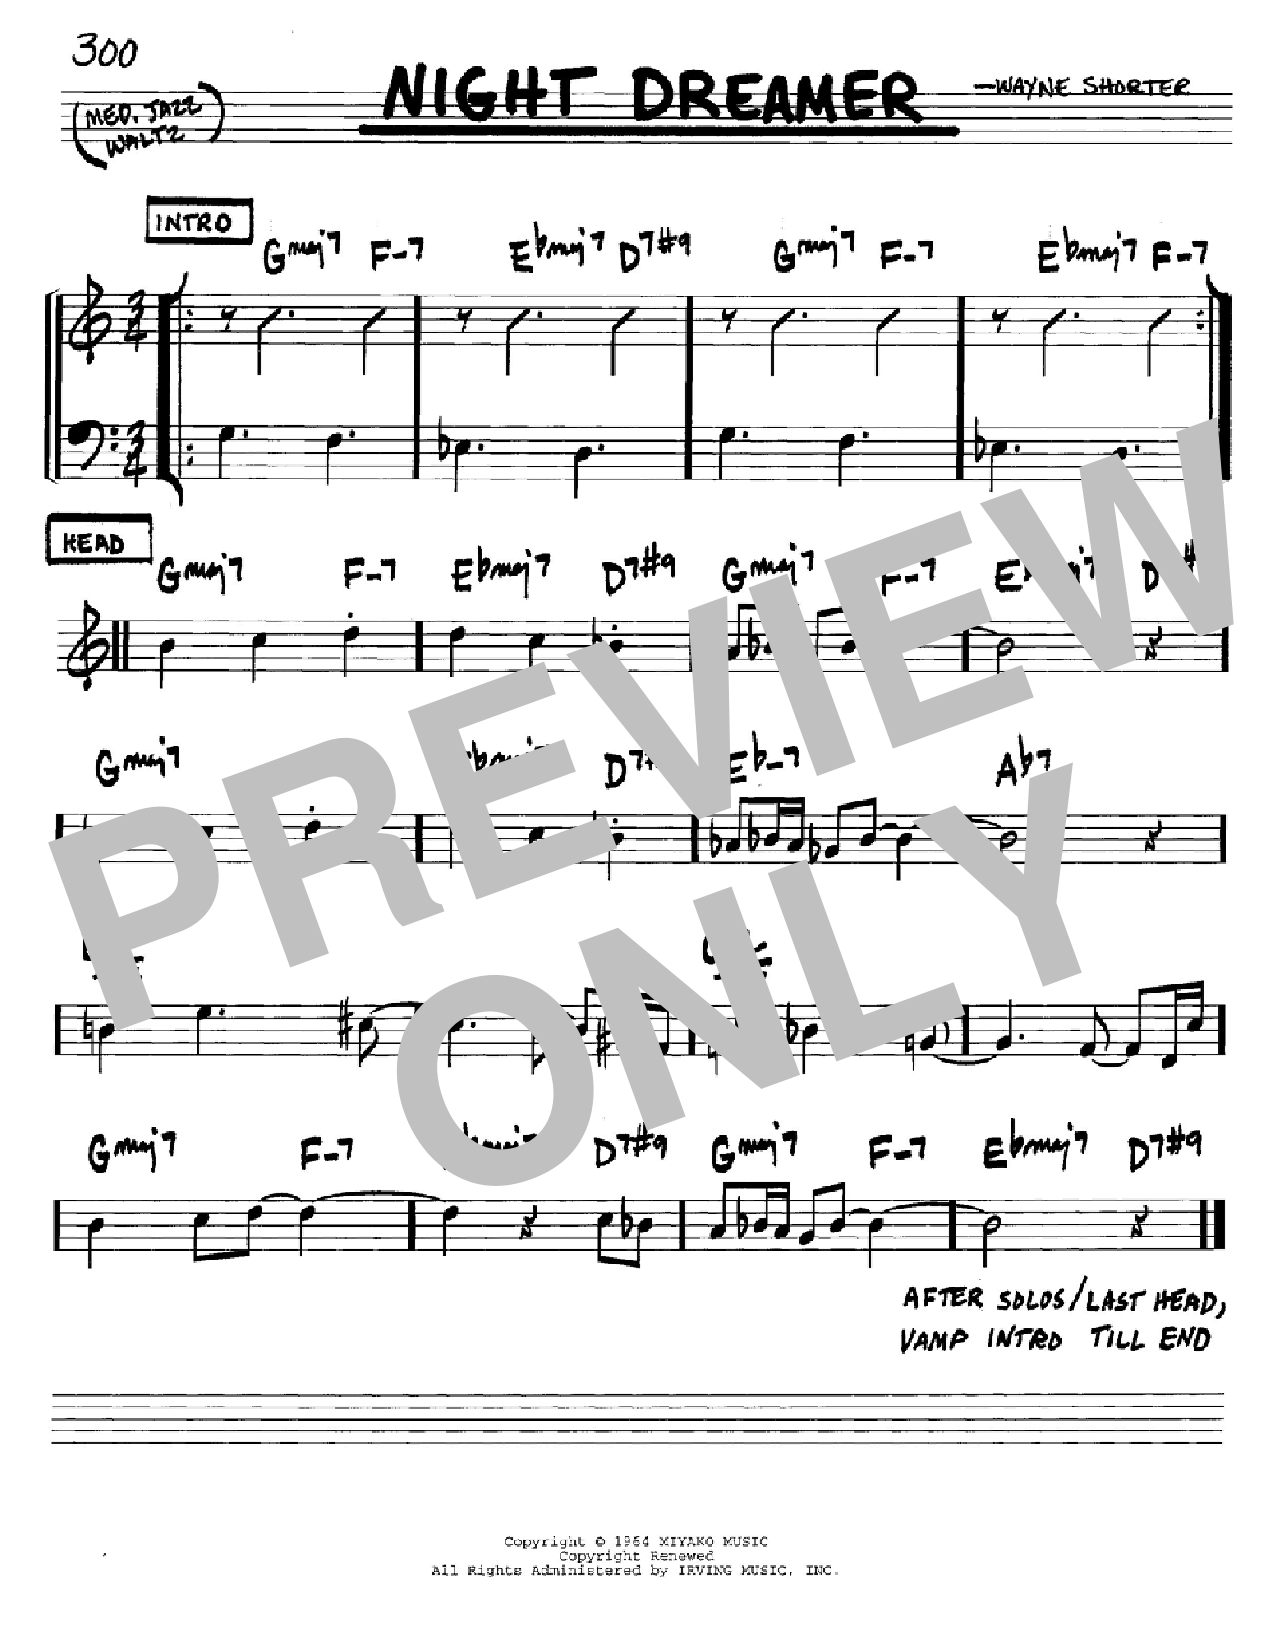 Wayne Shorter Night Dreamer Sheet Music Notes & Chords for Tenor Sax Transcription - Download or Print PDF